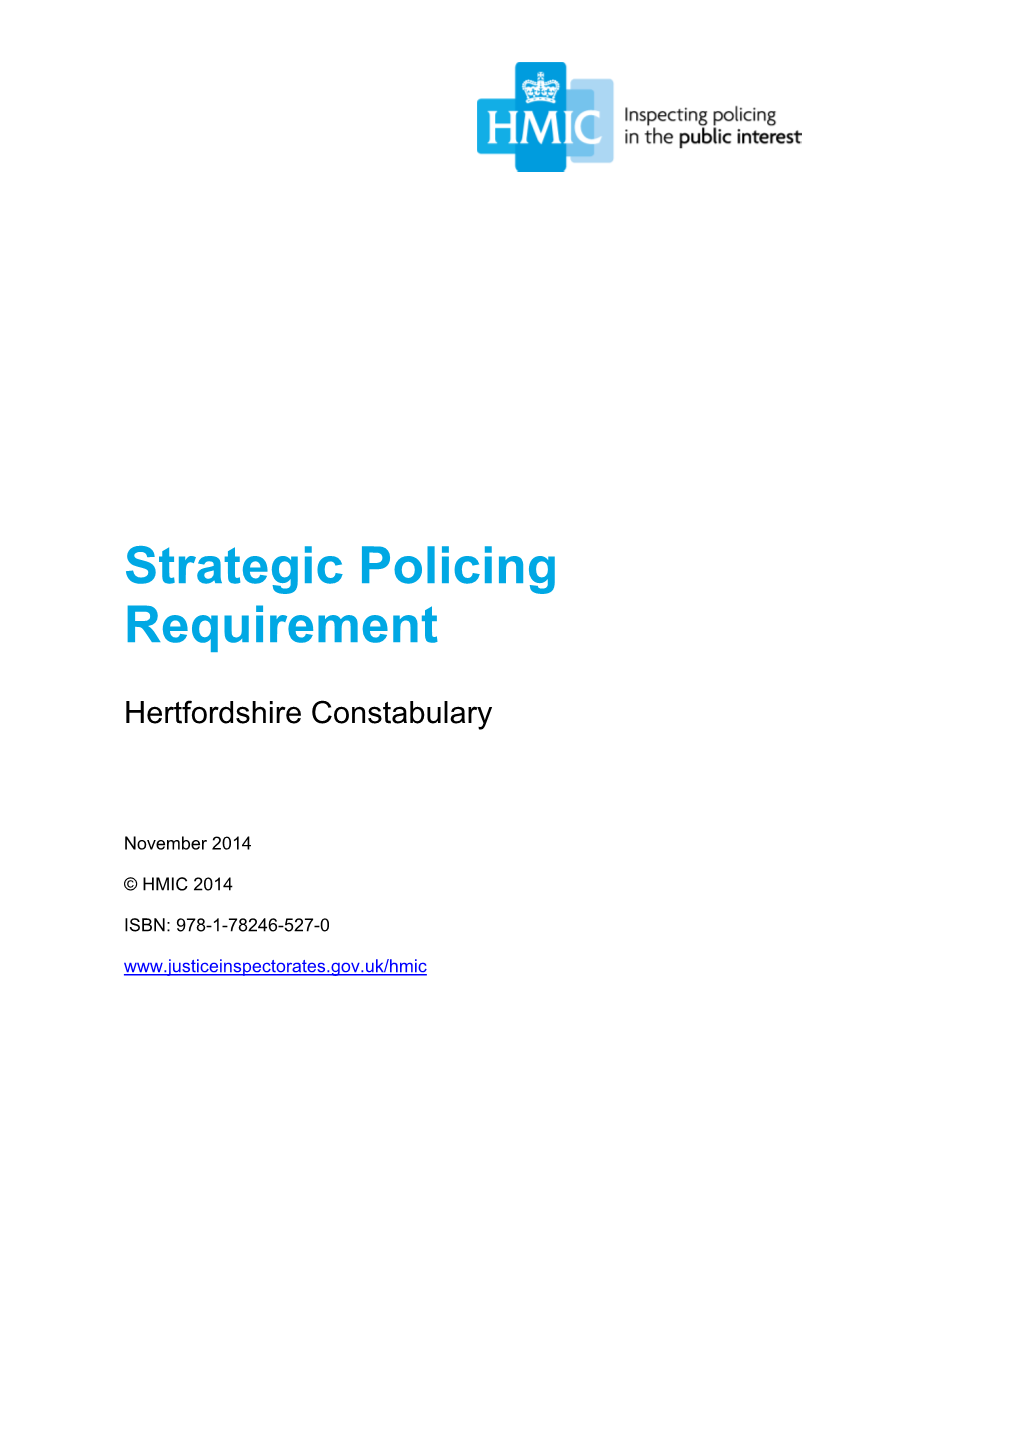 Strategic Policing Requirement – Hertfordshire Constabulary